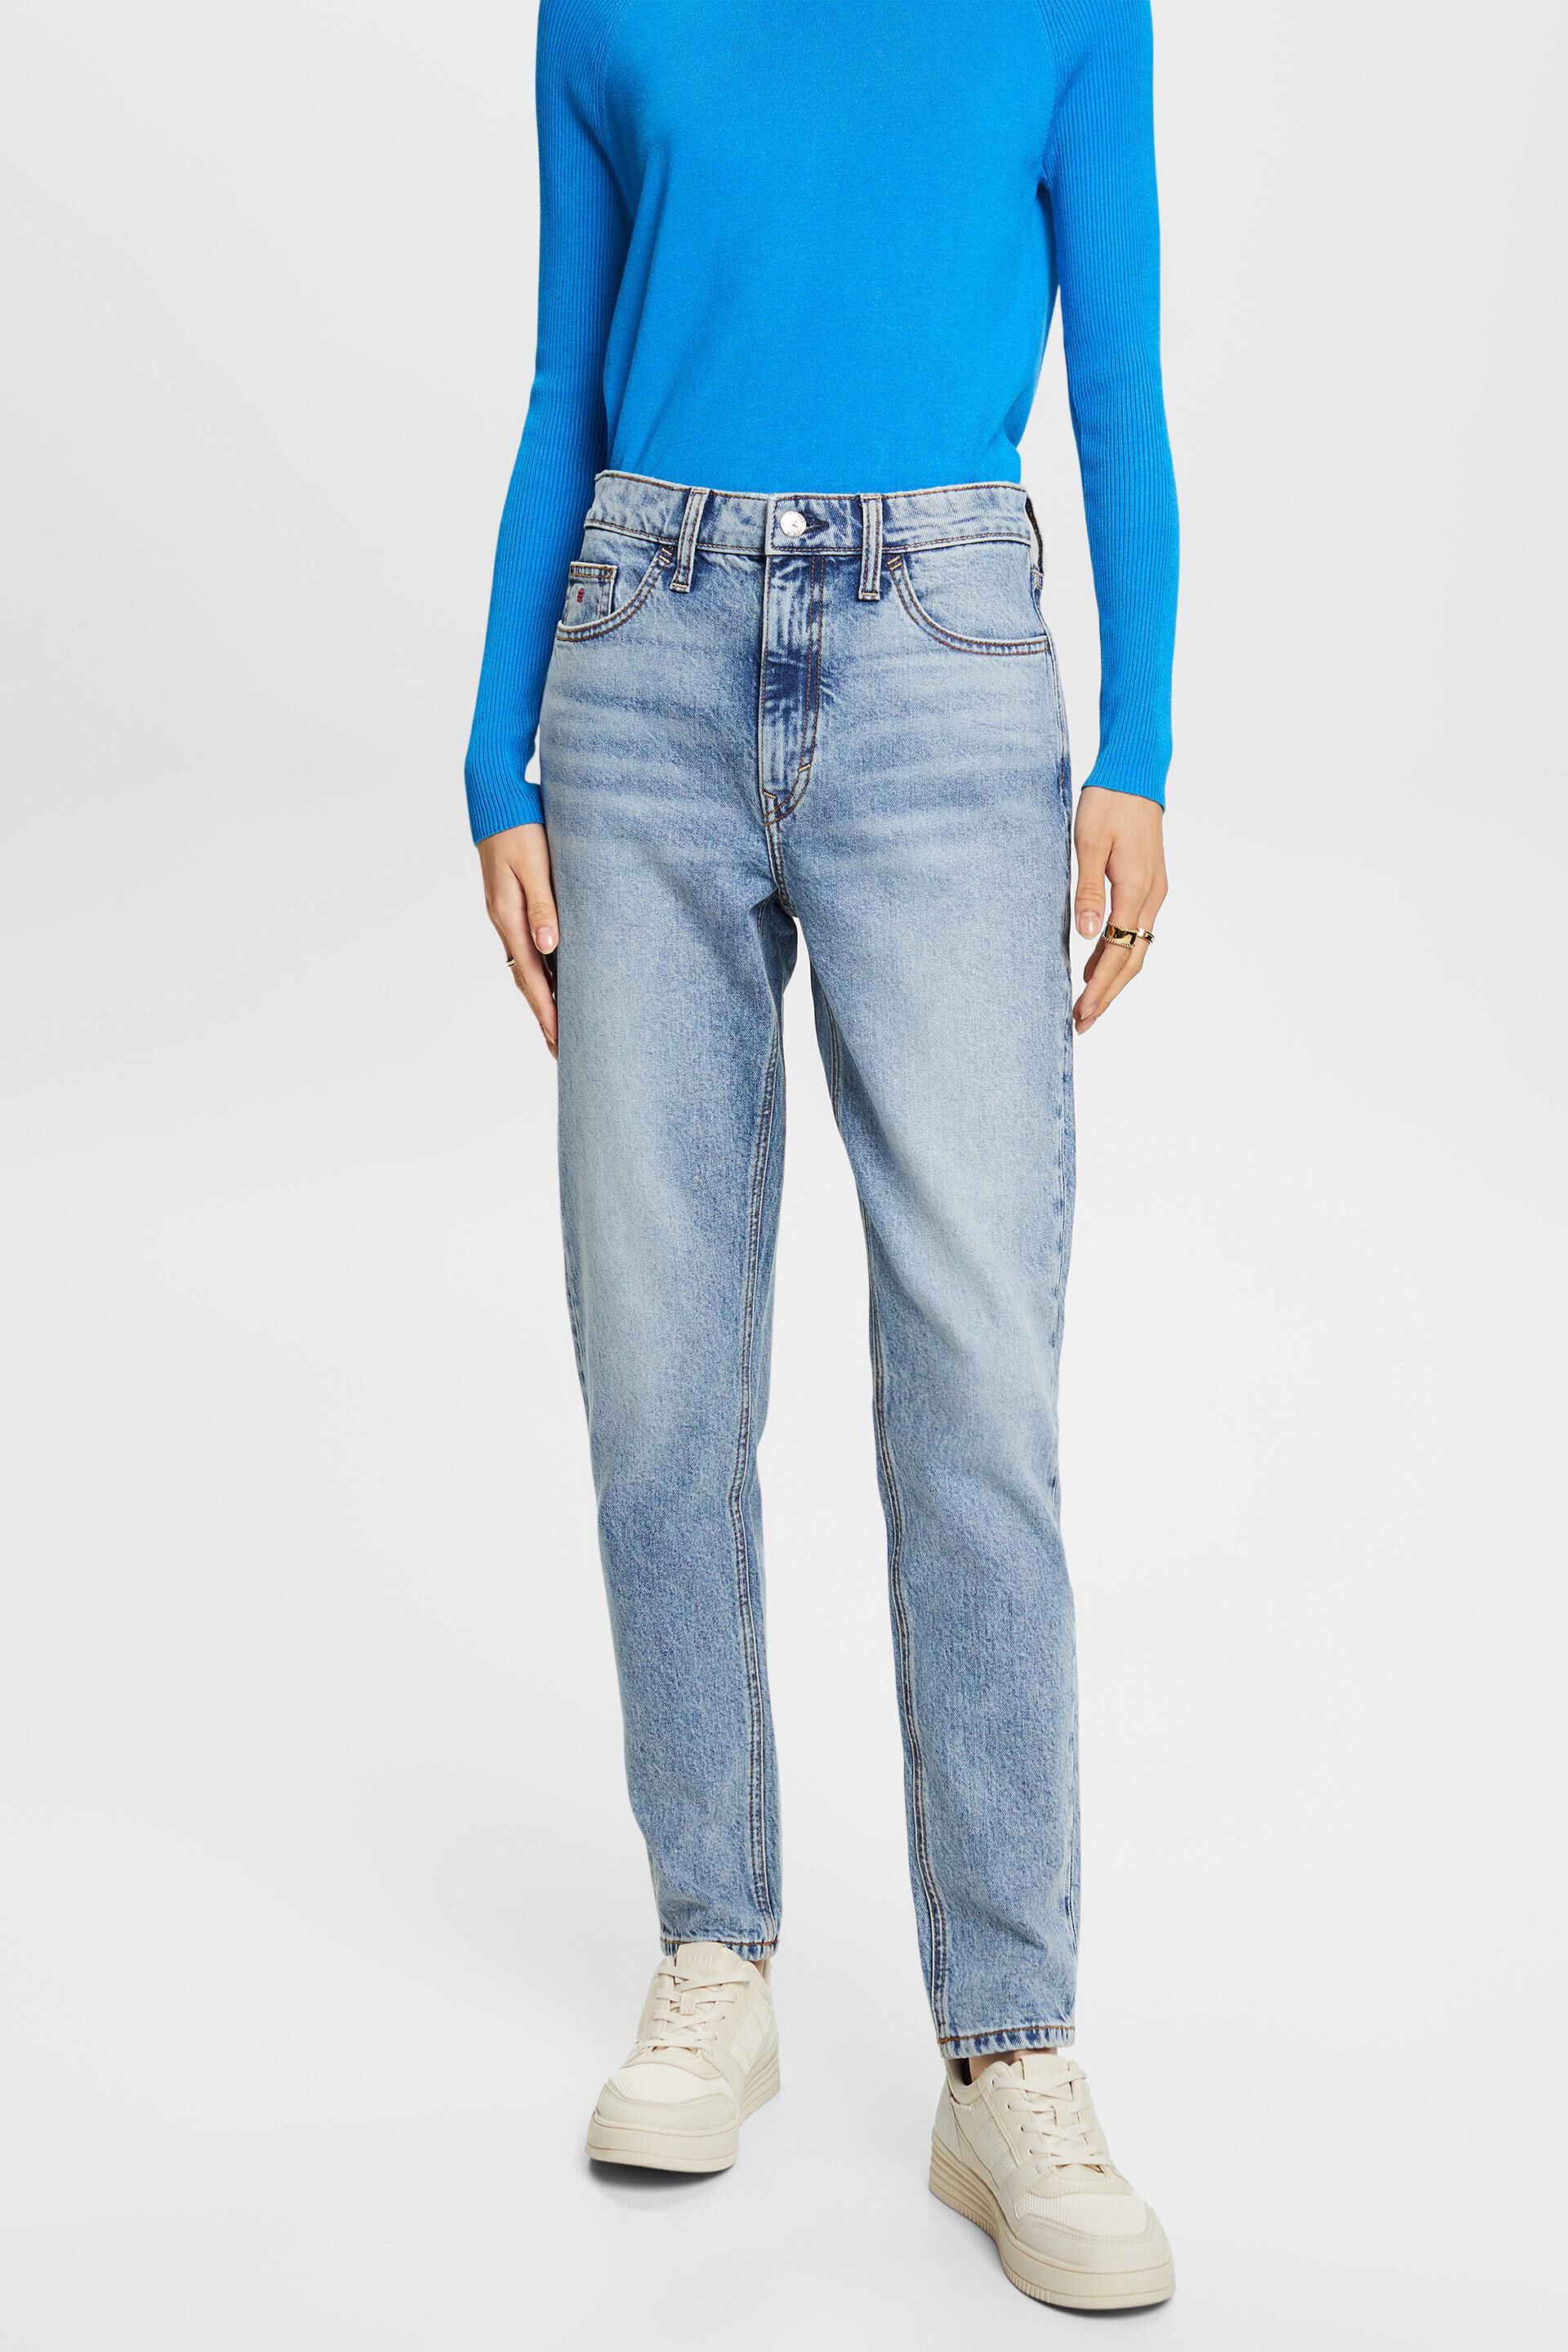 Esprit Damen Retro Classic High-Rise Jeans